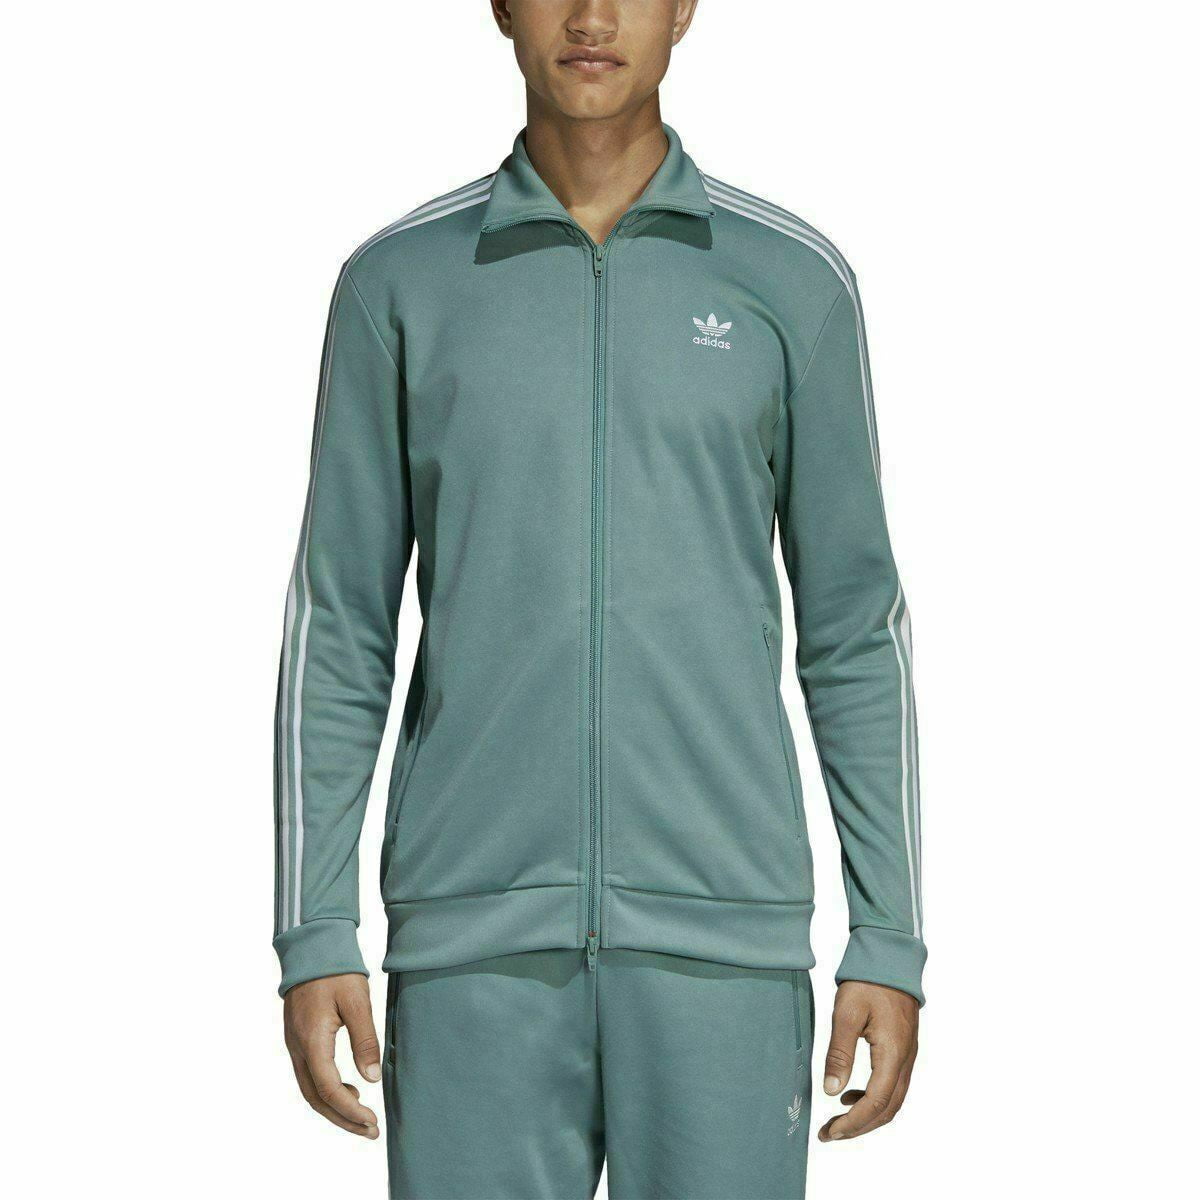 Adidas Originals Men's Beckenbauer Track Jacket Vapour Steel